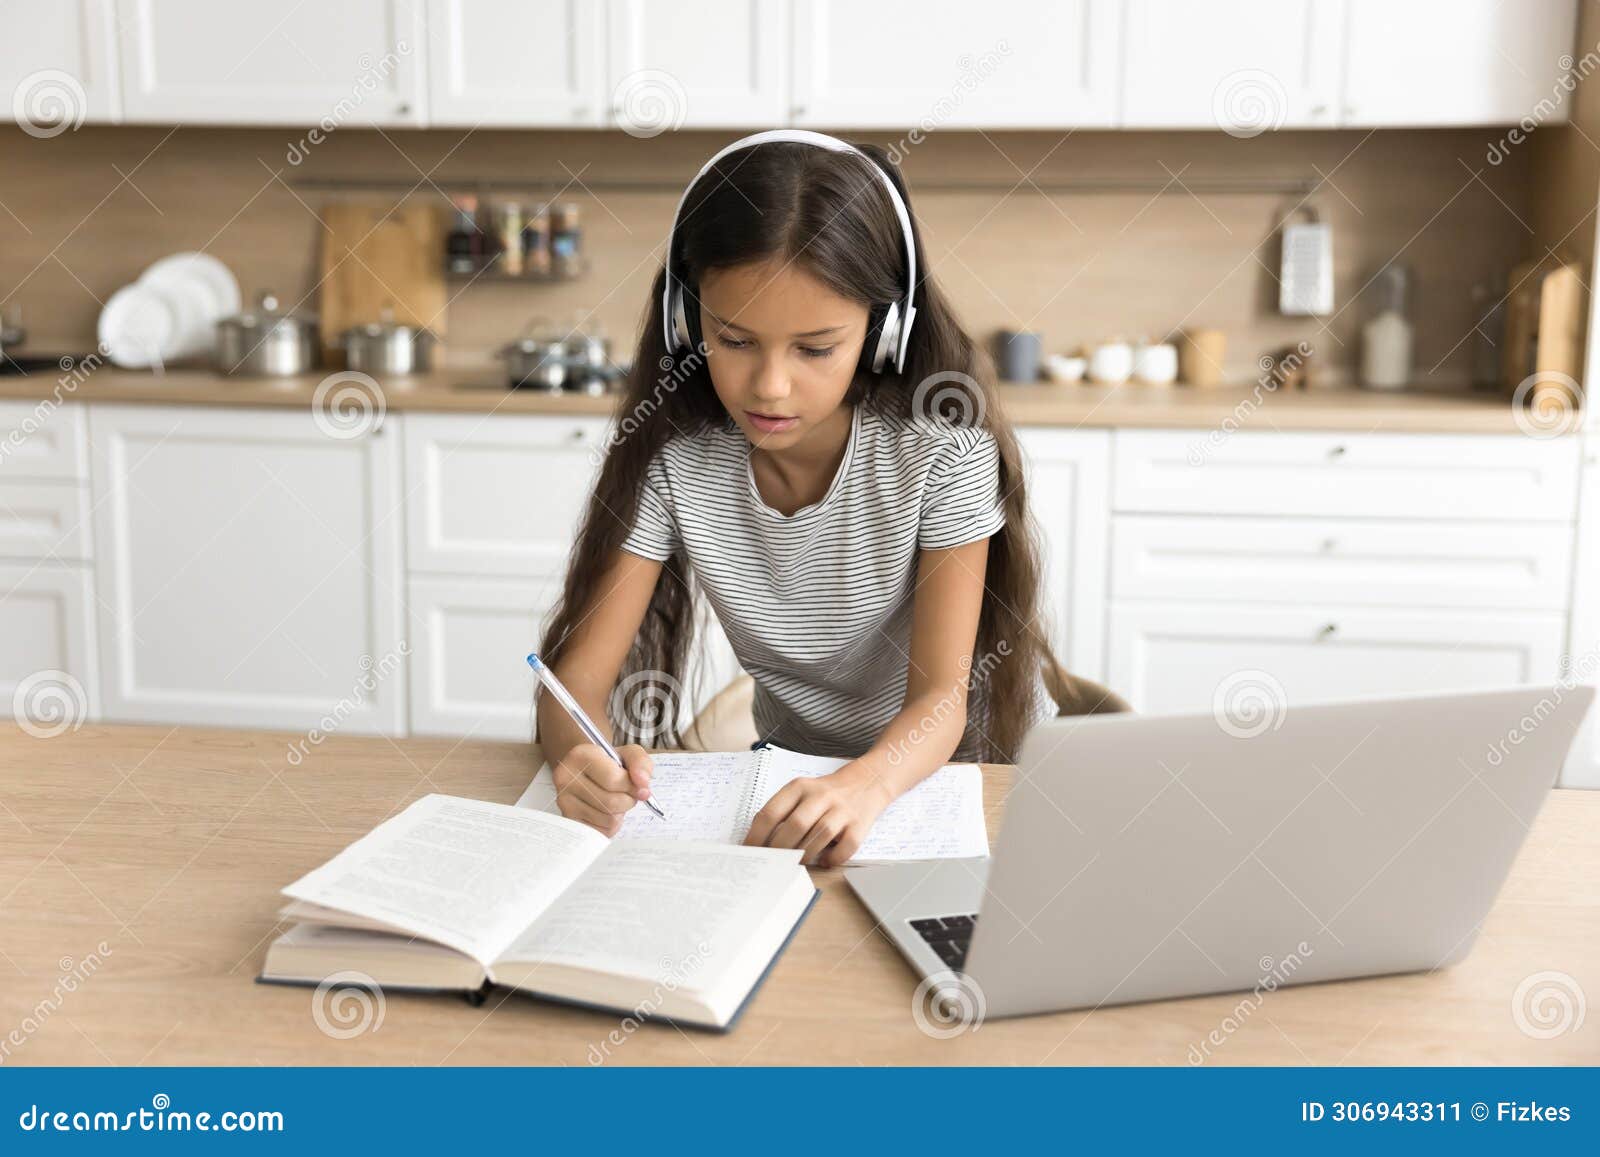 focused pre teen schoolkid girl in headphones studying from home